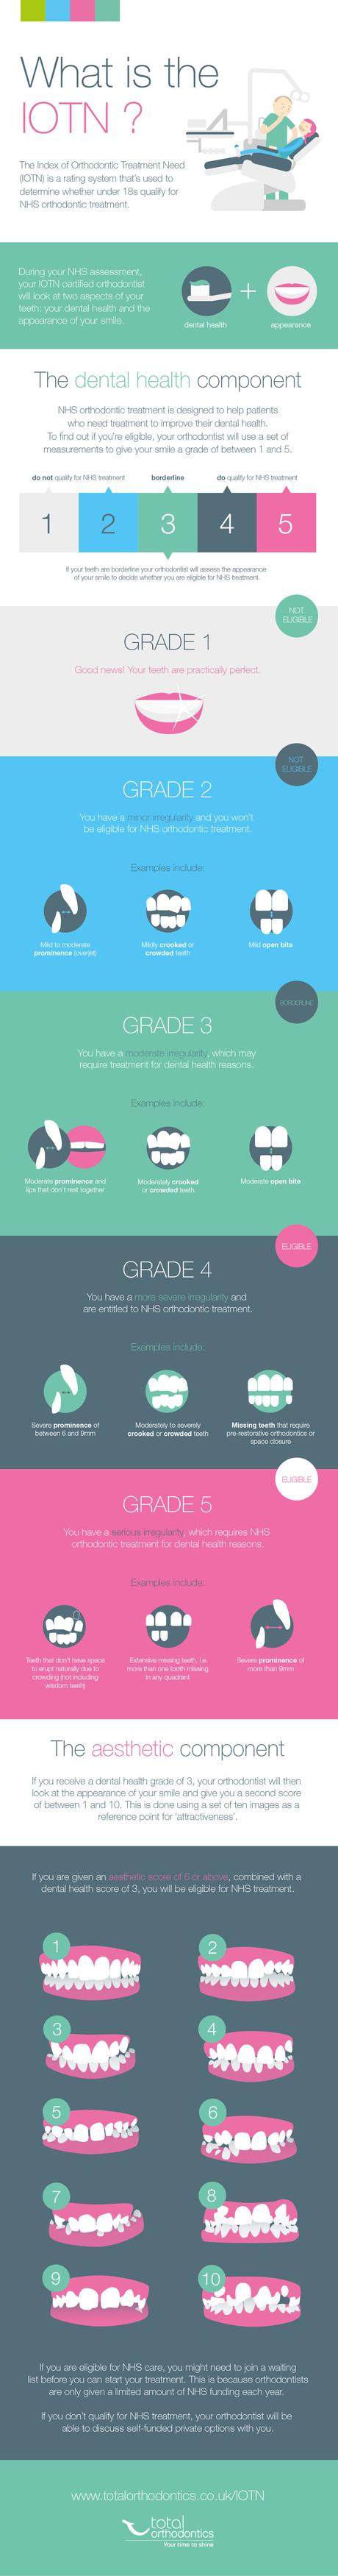 index of orthodontic treatment need